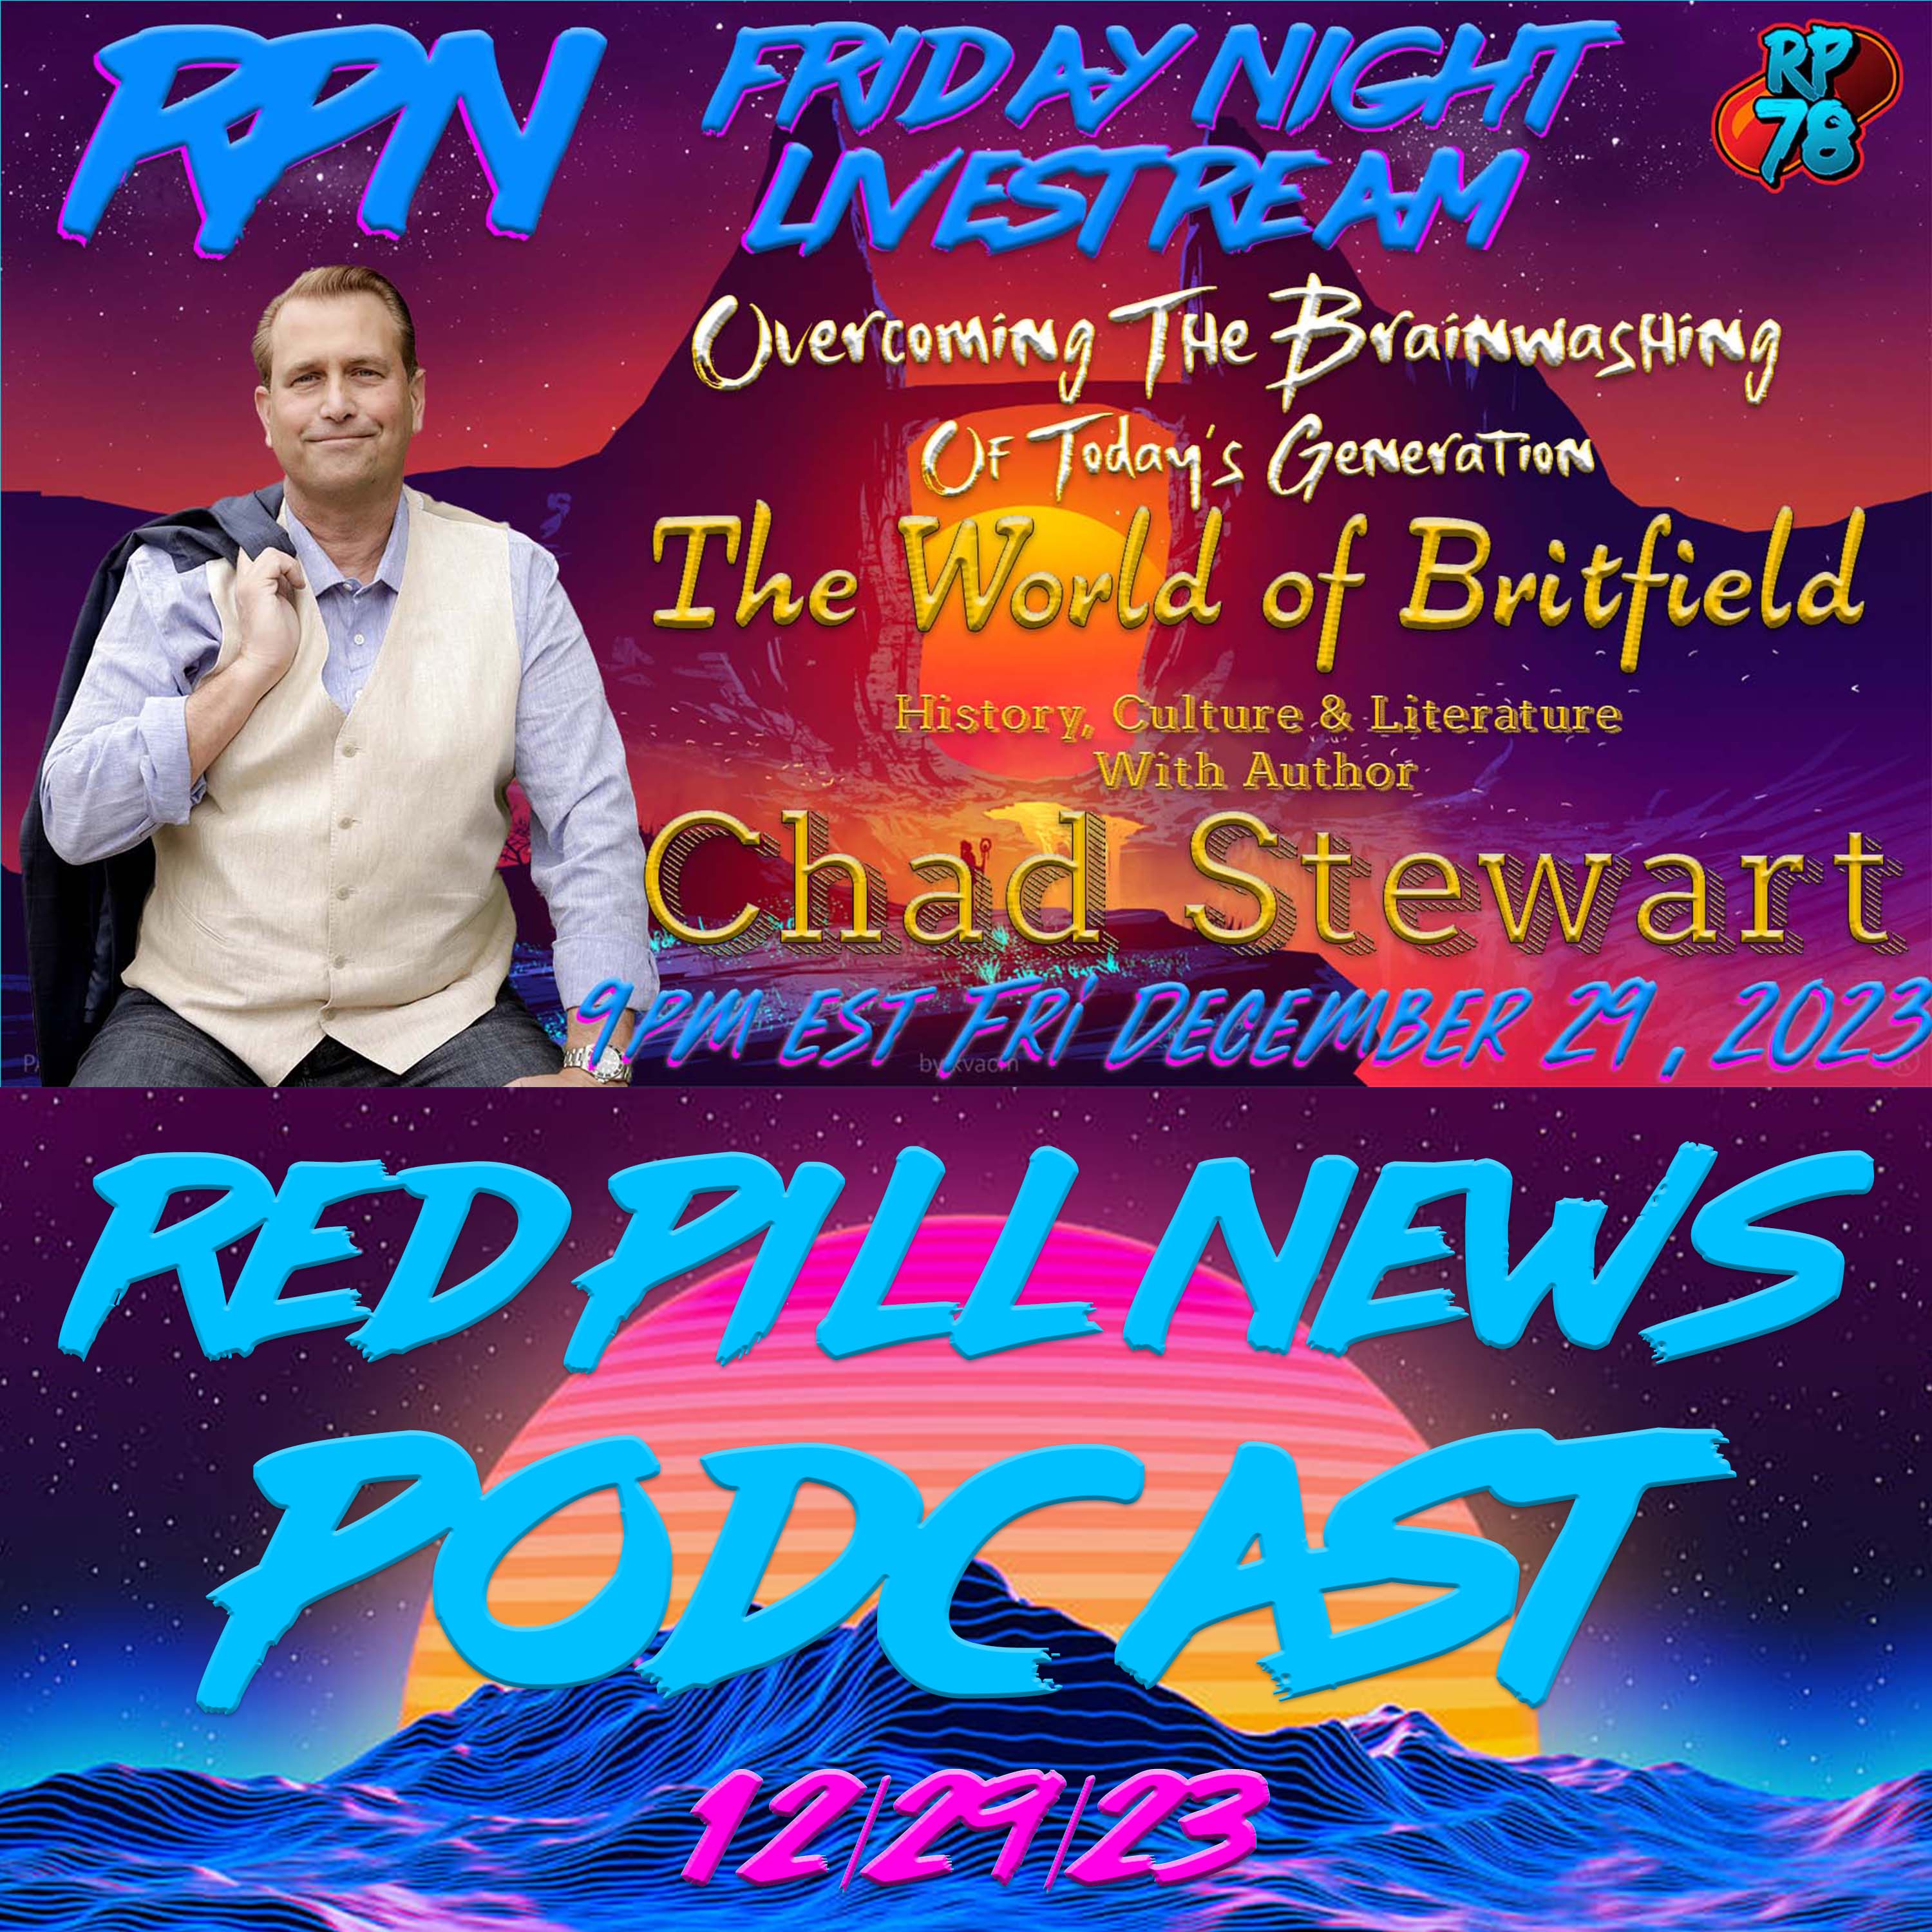 Overcoming Brainwashing with History, Culture & Literacy - Chad Stewart on Fri. Night Livestream